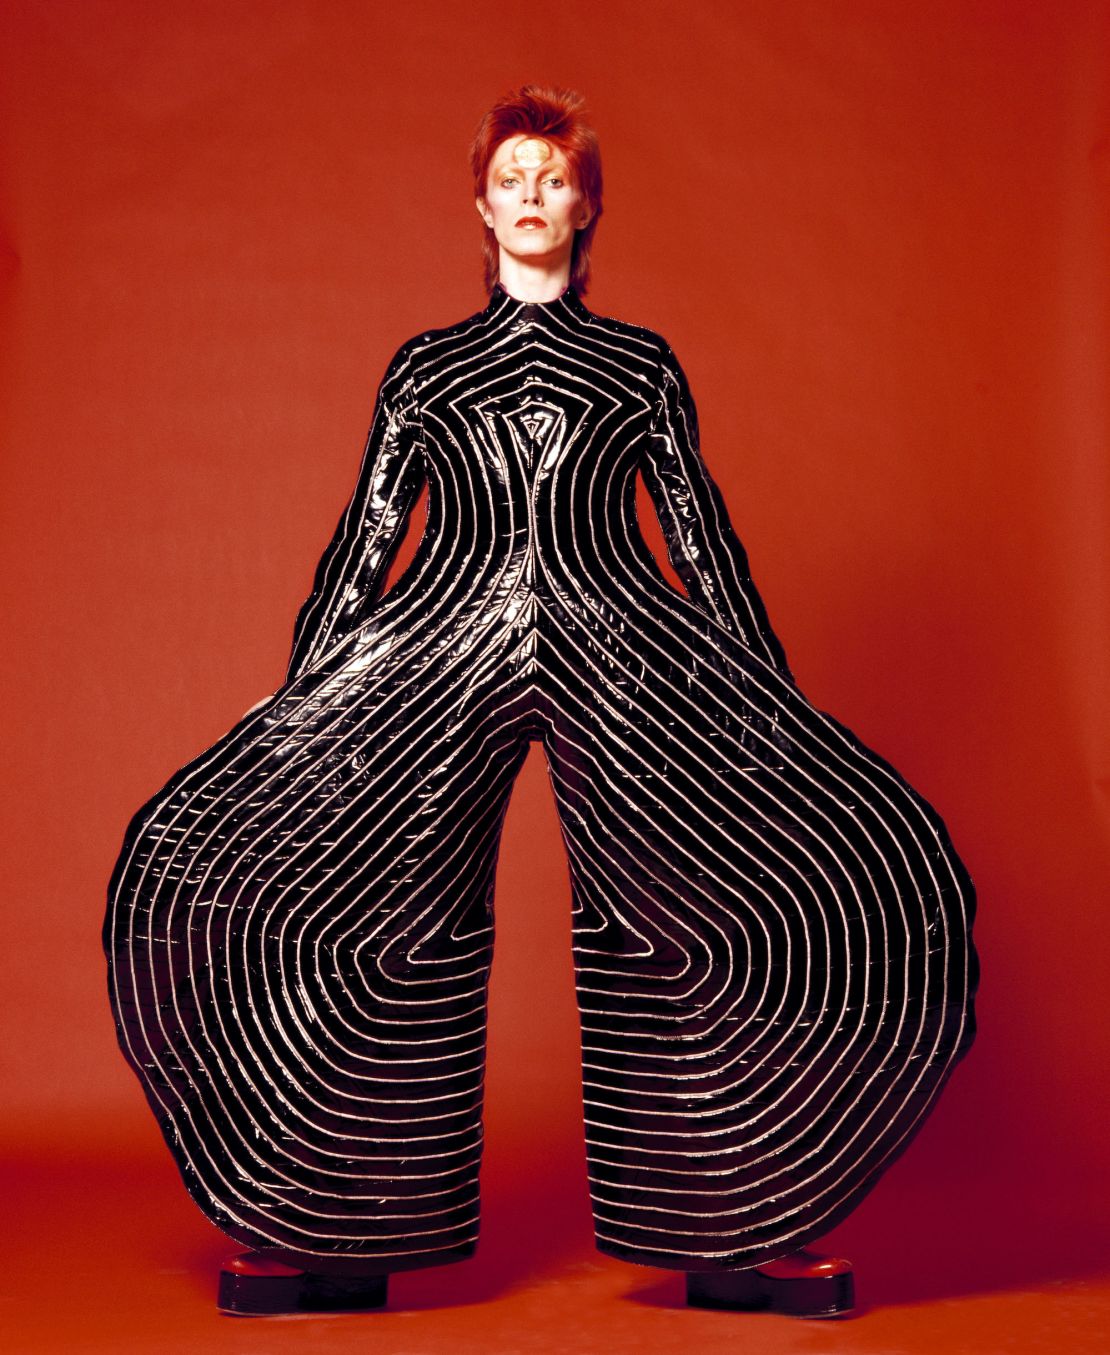 Kansai Yamamoto designed the elaborate striped bodysuit for Bowie's "Aladdin Sane" tour.